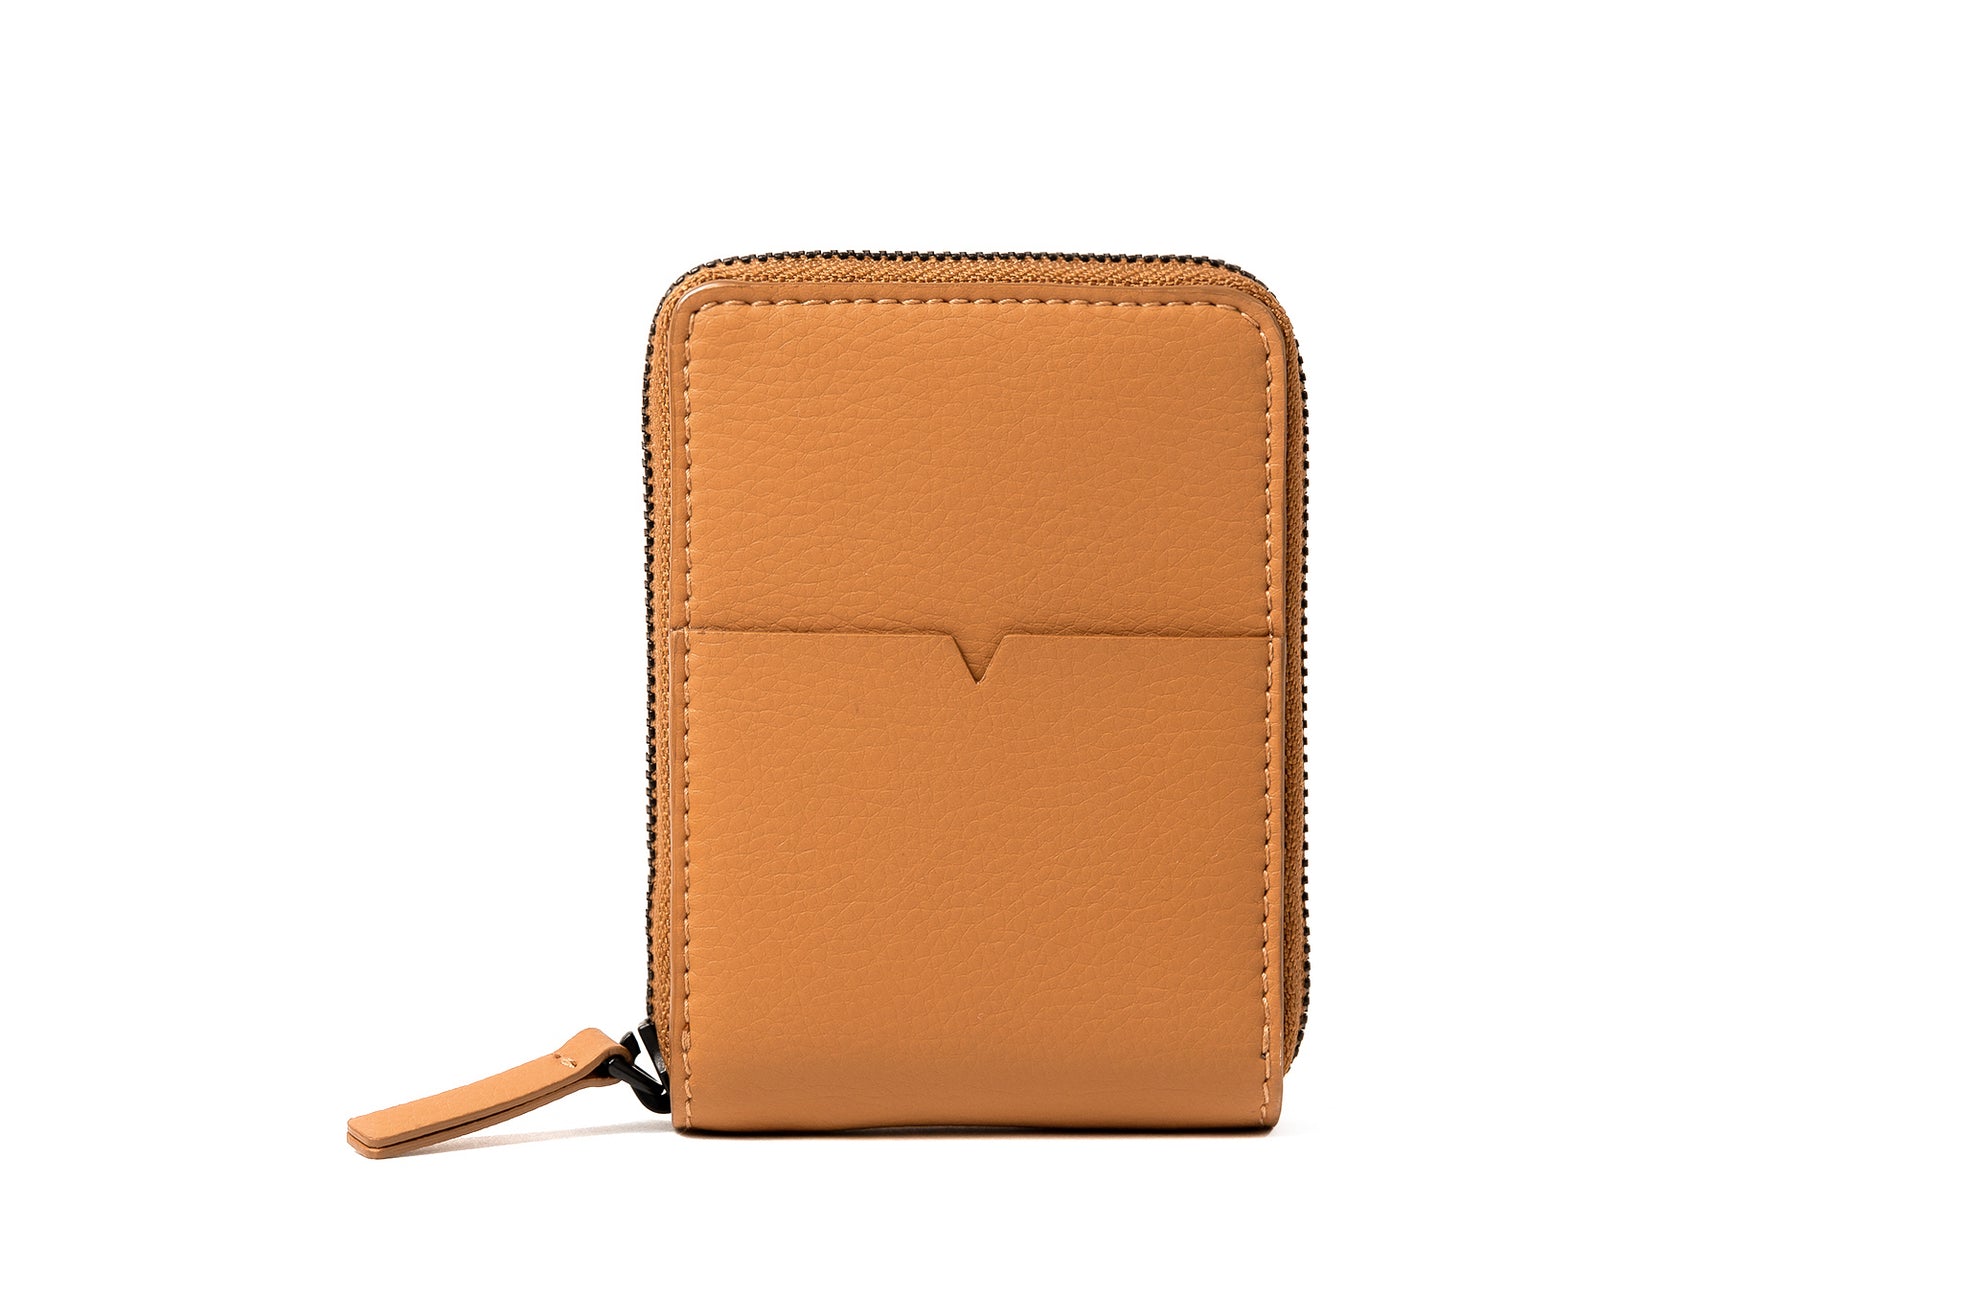 The Zip-Around Wallet in Technik-Leather in Caramel image 1